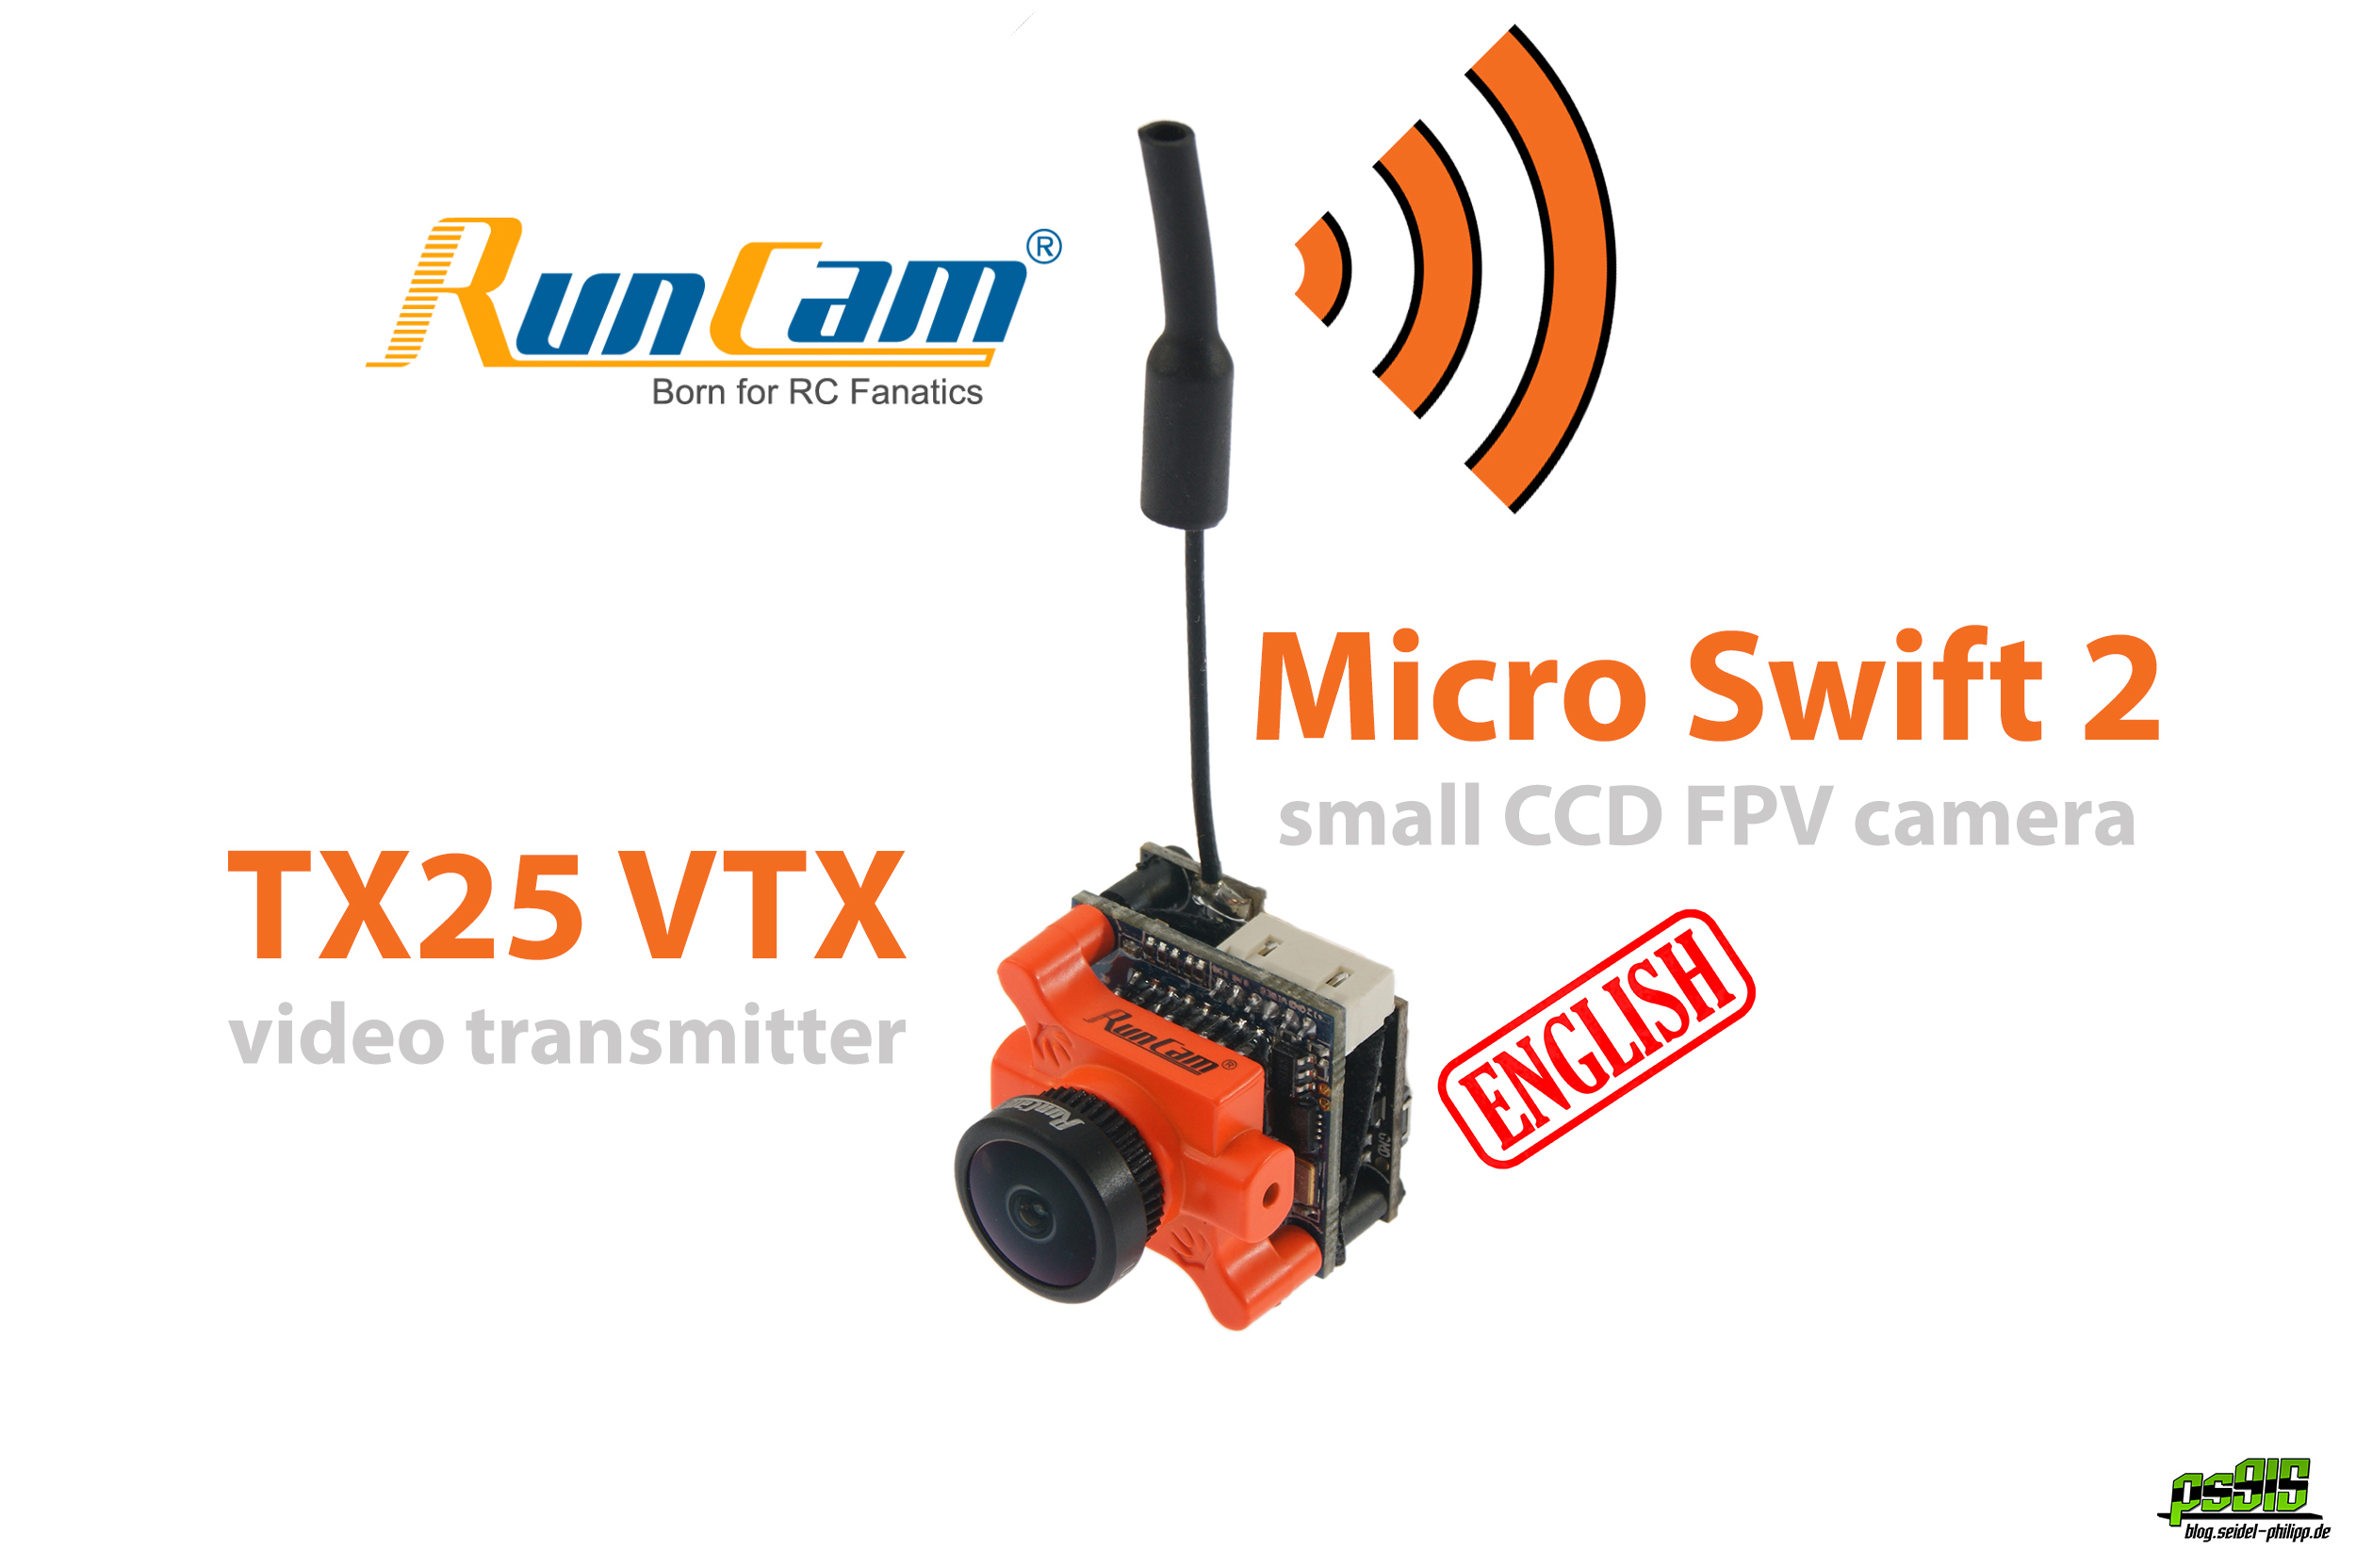 RunCam Micro Swift 2 & RunCam TX25 VTX Video Transmitter